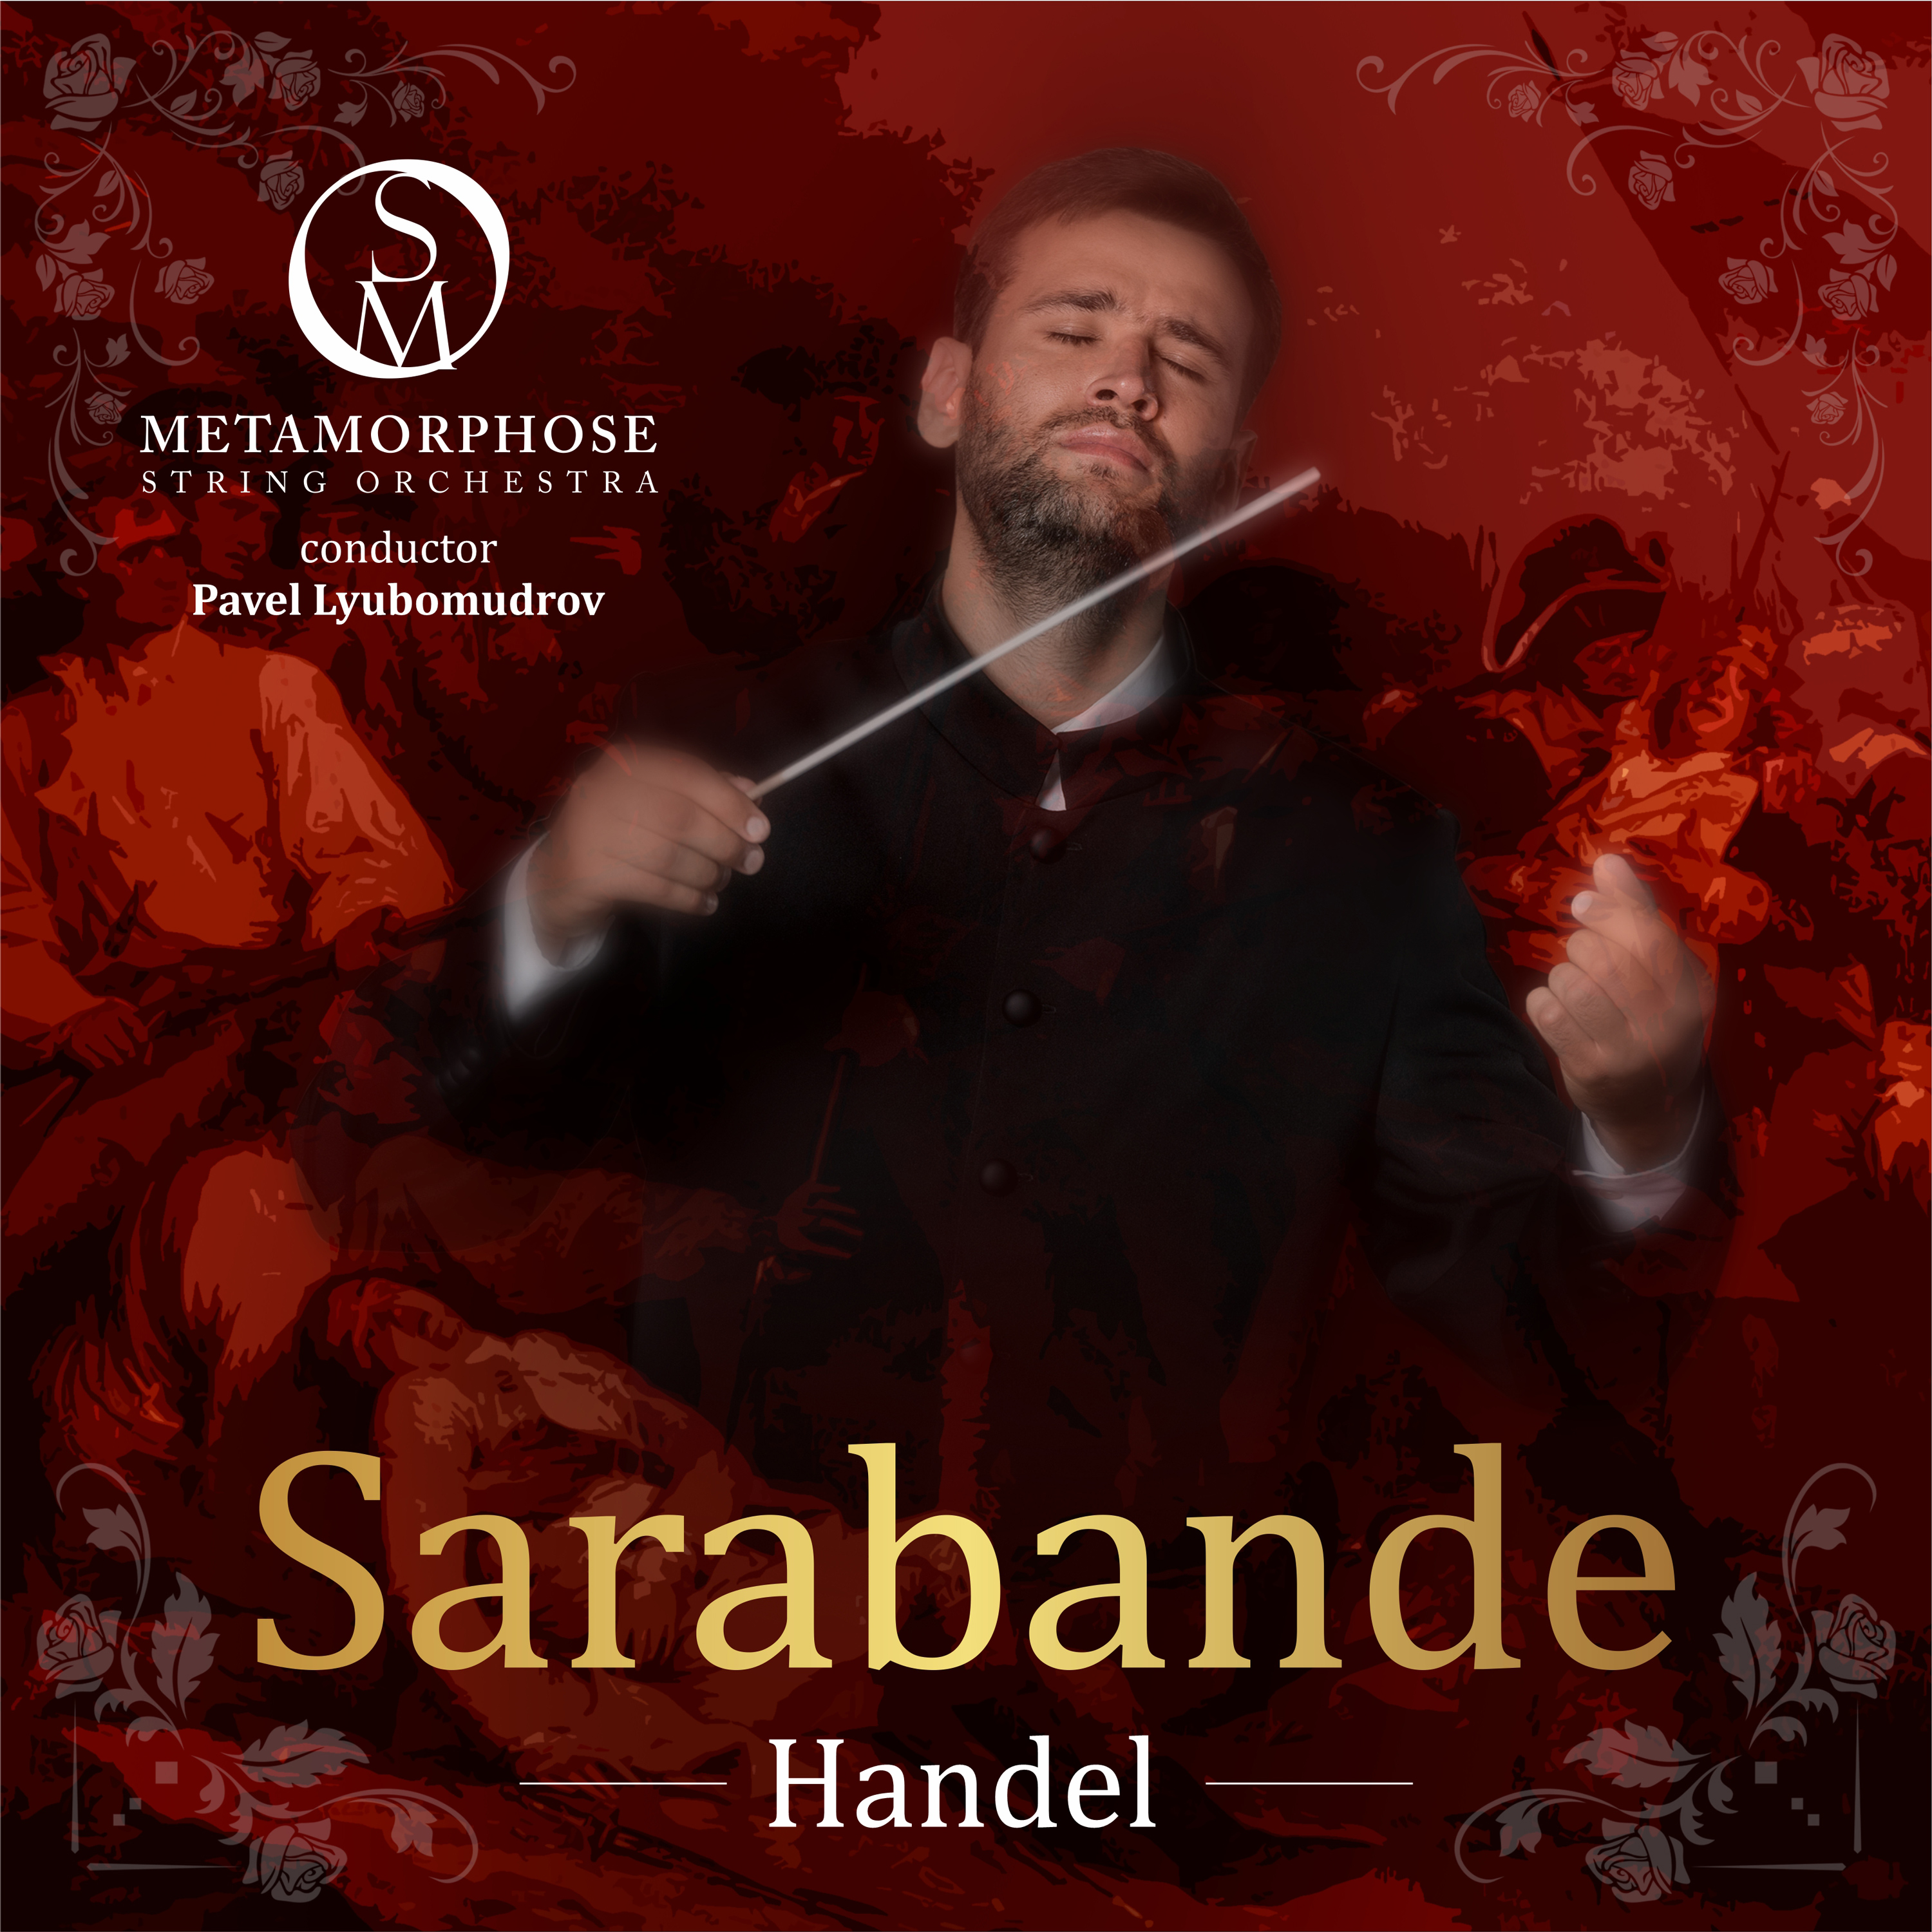 Händel: Suite No. 11 in D minor, HWV 437: III. Sarabande